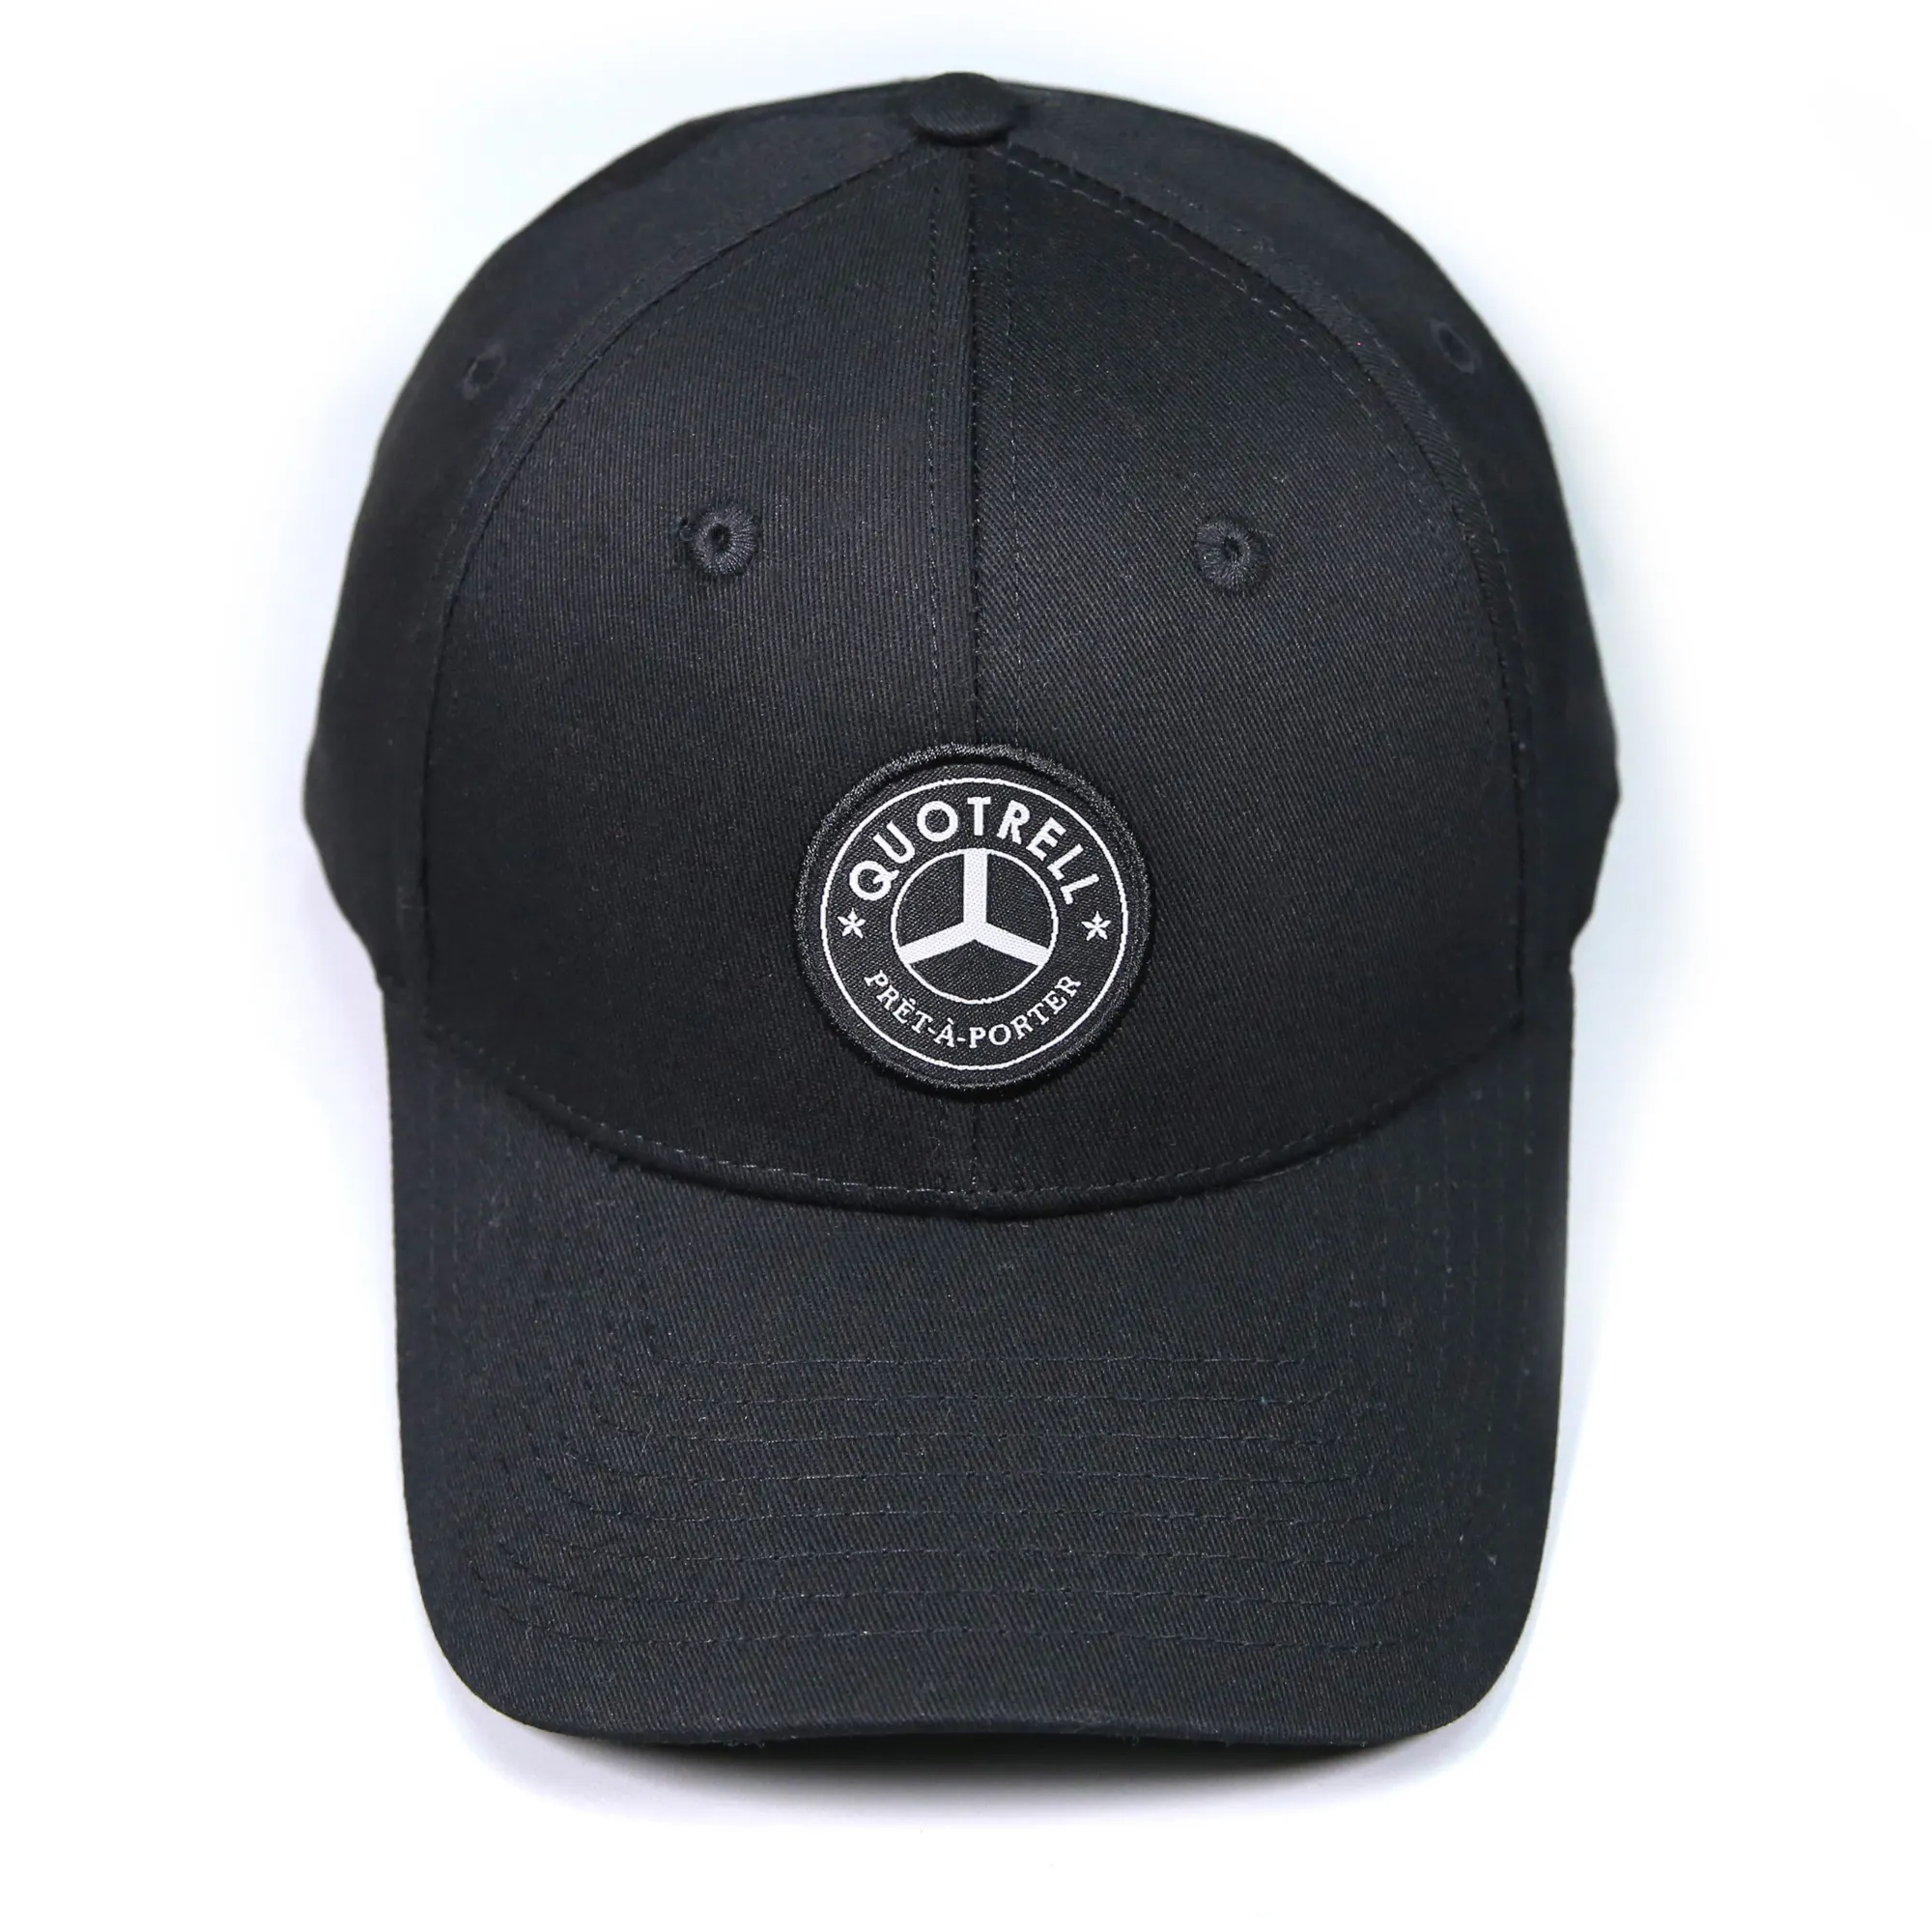 Promotional 6 Panels Black Golf Ball Cap custom Embroidery Patch Oem Baseball Caps Hats Bulk